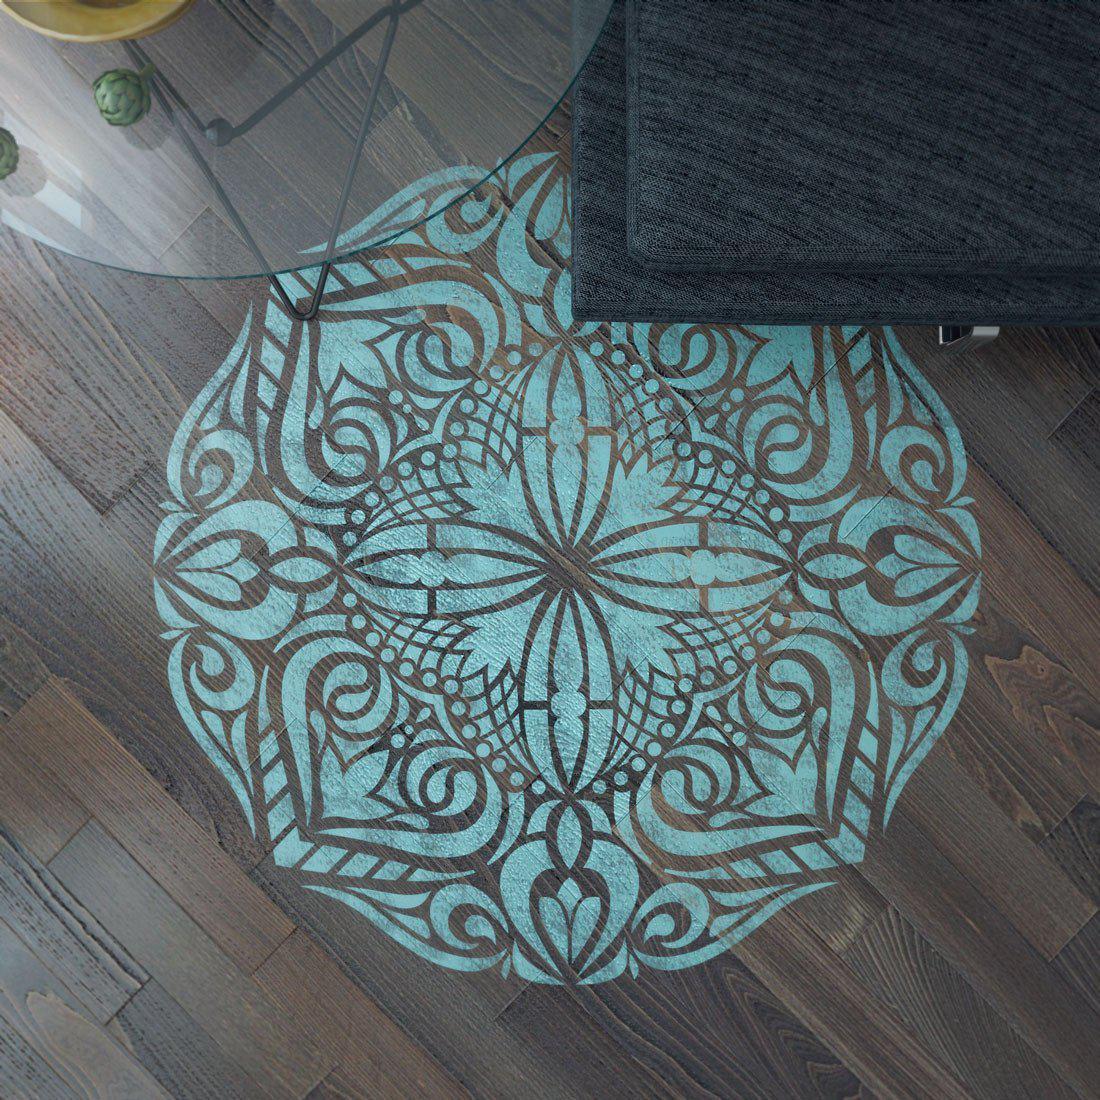 Large Mandala Stencils, Reusable Floral Design Mandala Painting